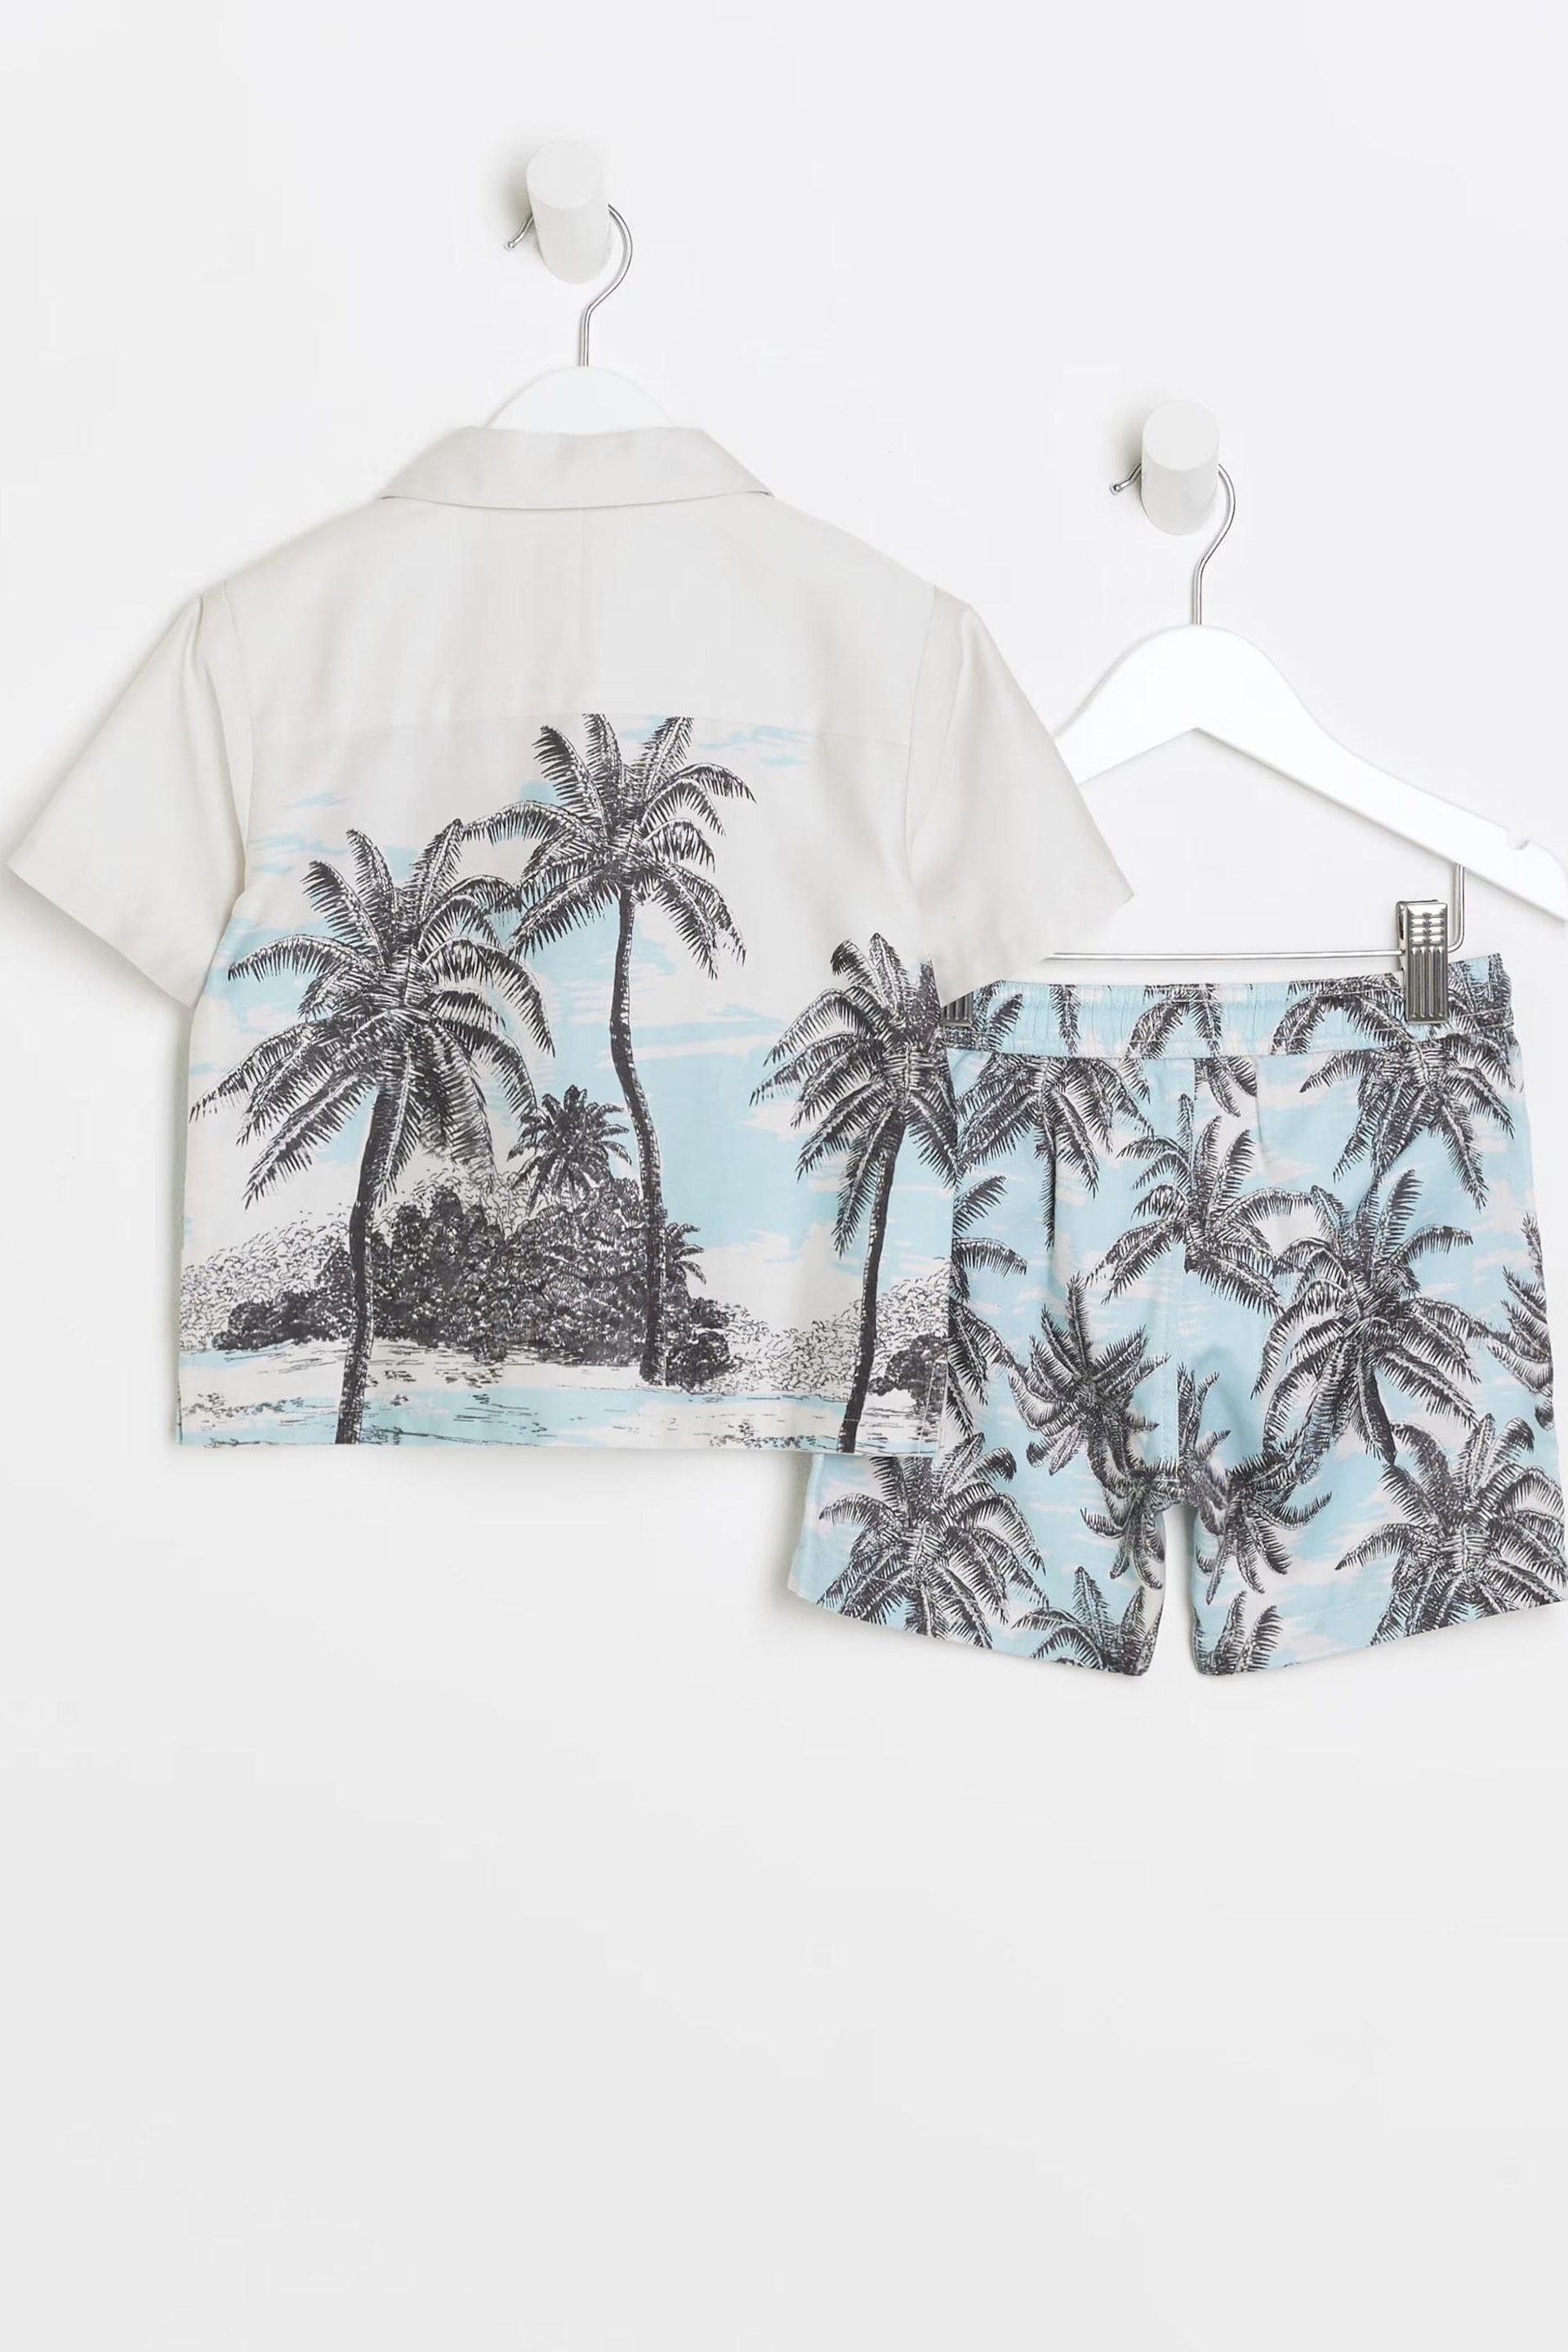 River Island Cream Boys Palm Print Pyjama Set - Image 2 of 5